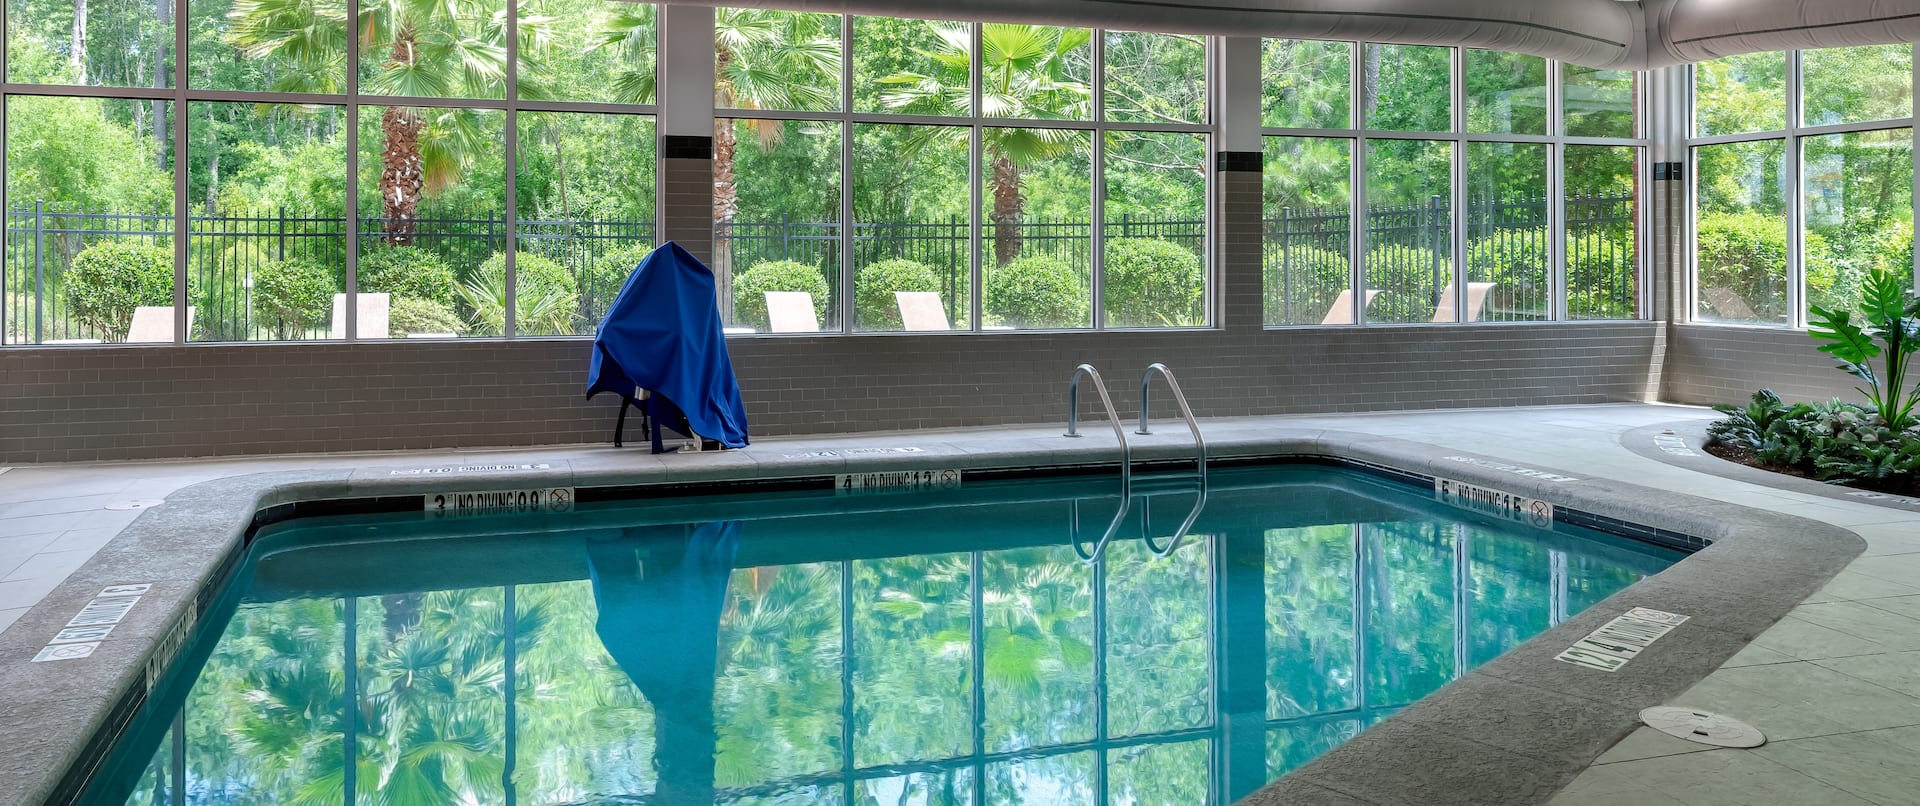 Enjoy our indoor heated pool